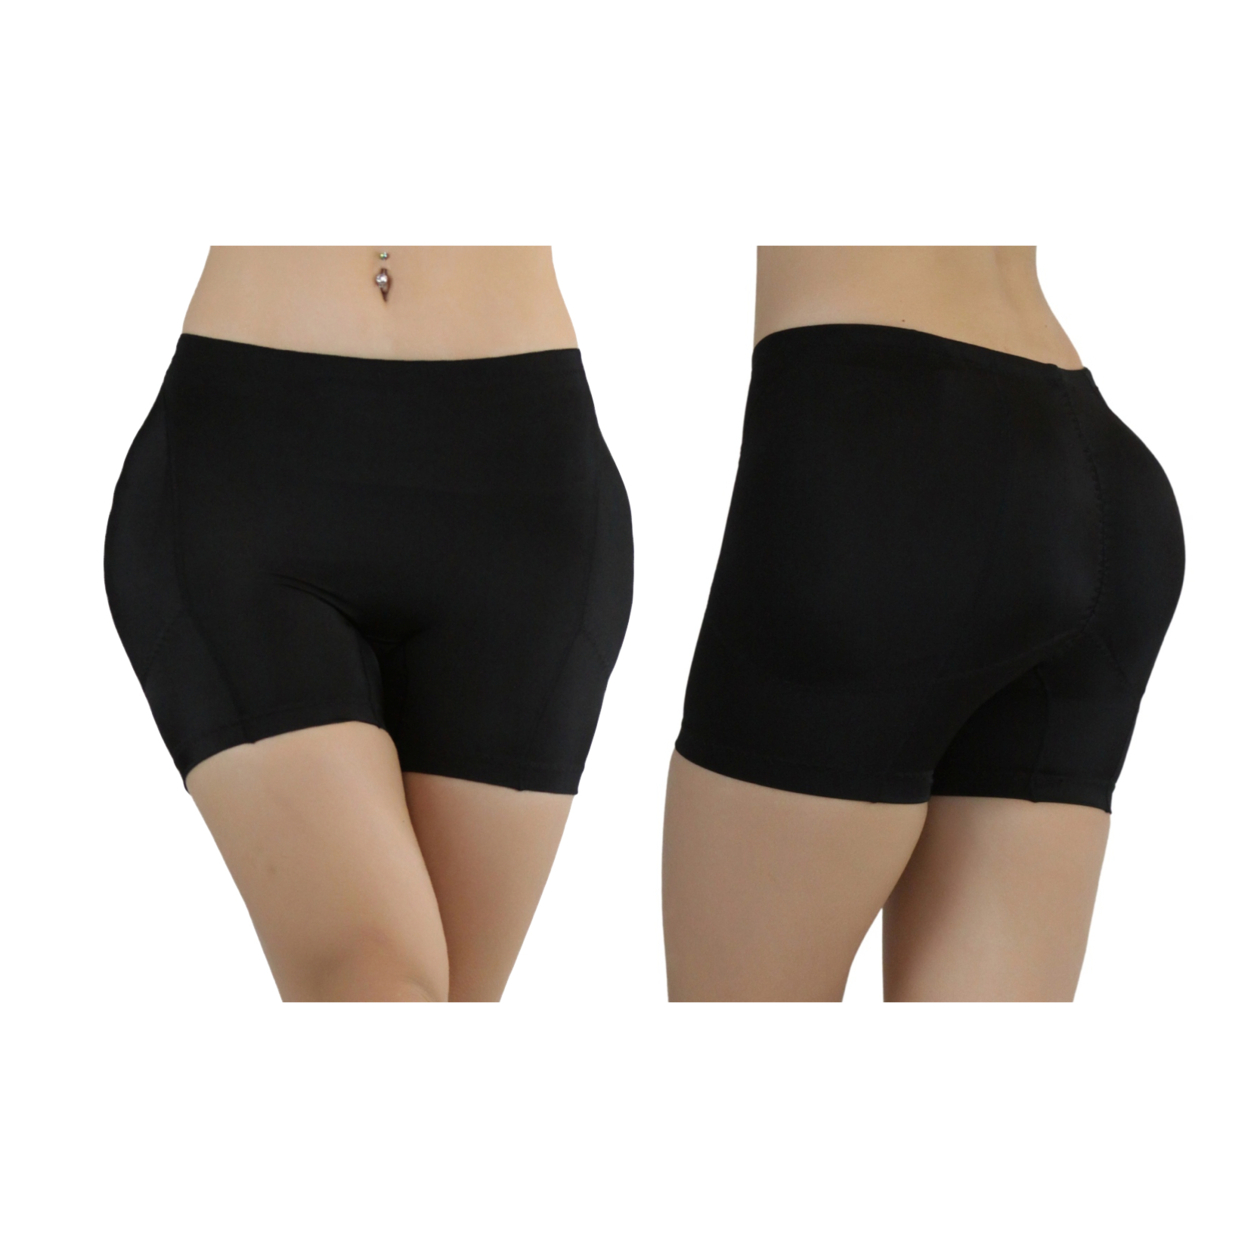 Women's Butt And Hip Padded Shaper - Black, S